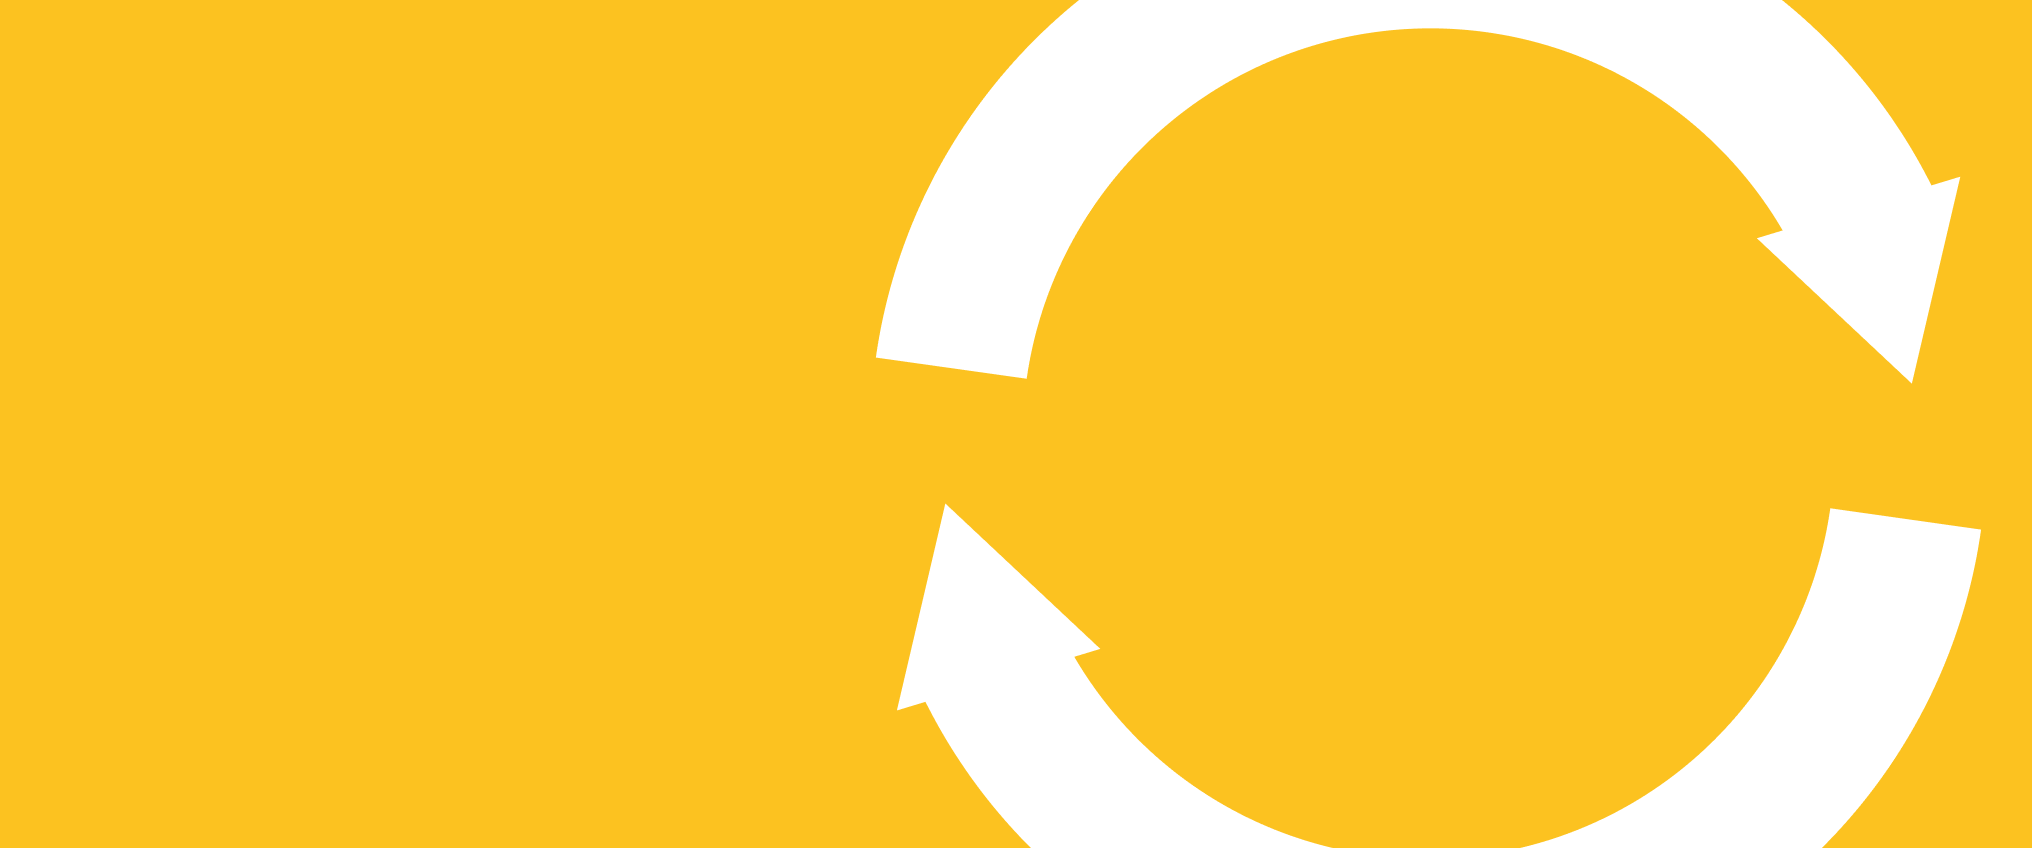 White circle on yellow background